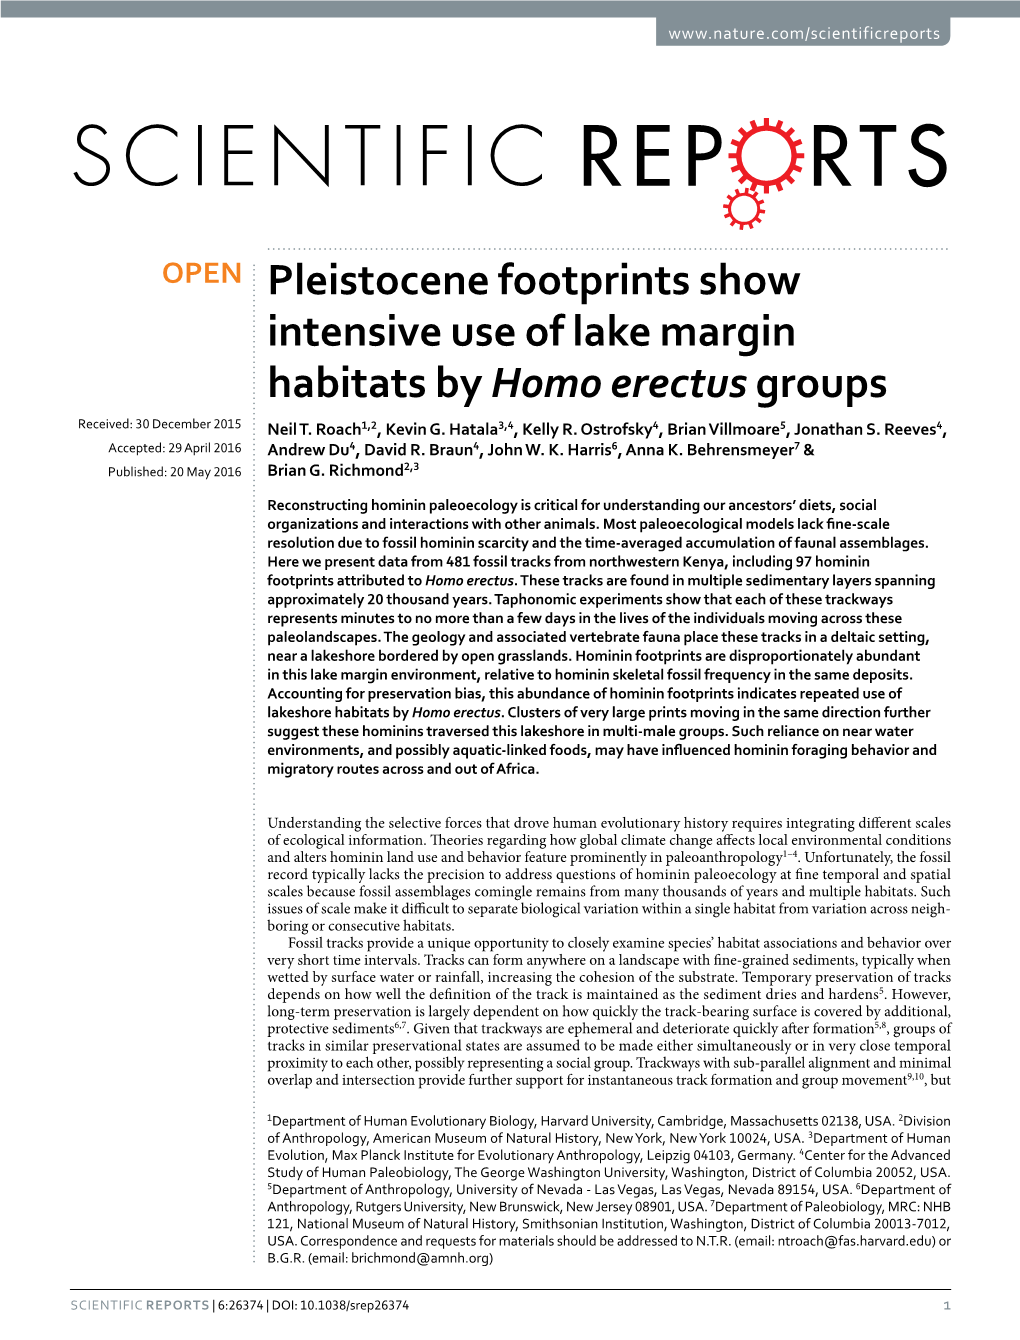 Pleistocene Footprints Show Intensive Use of Lake Margin Habitats by Homo Erectus Groups Received: 30 December 2015 Neil T